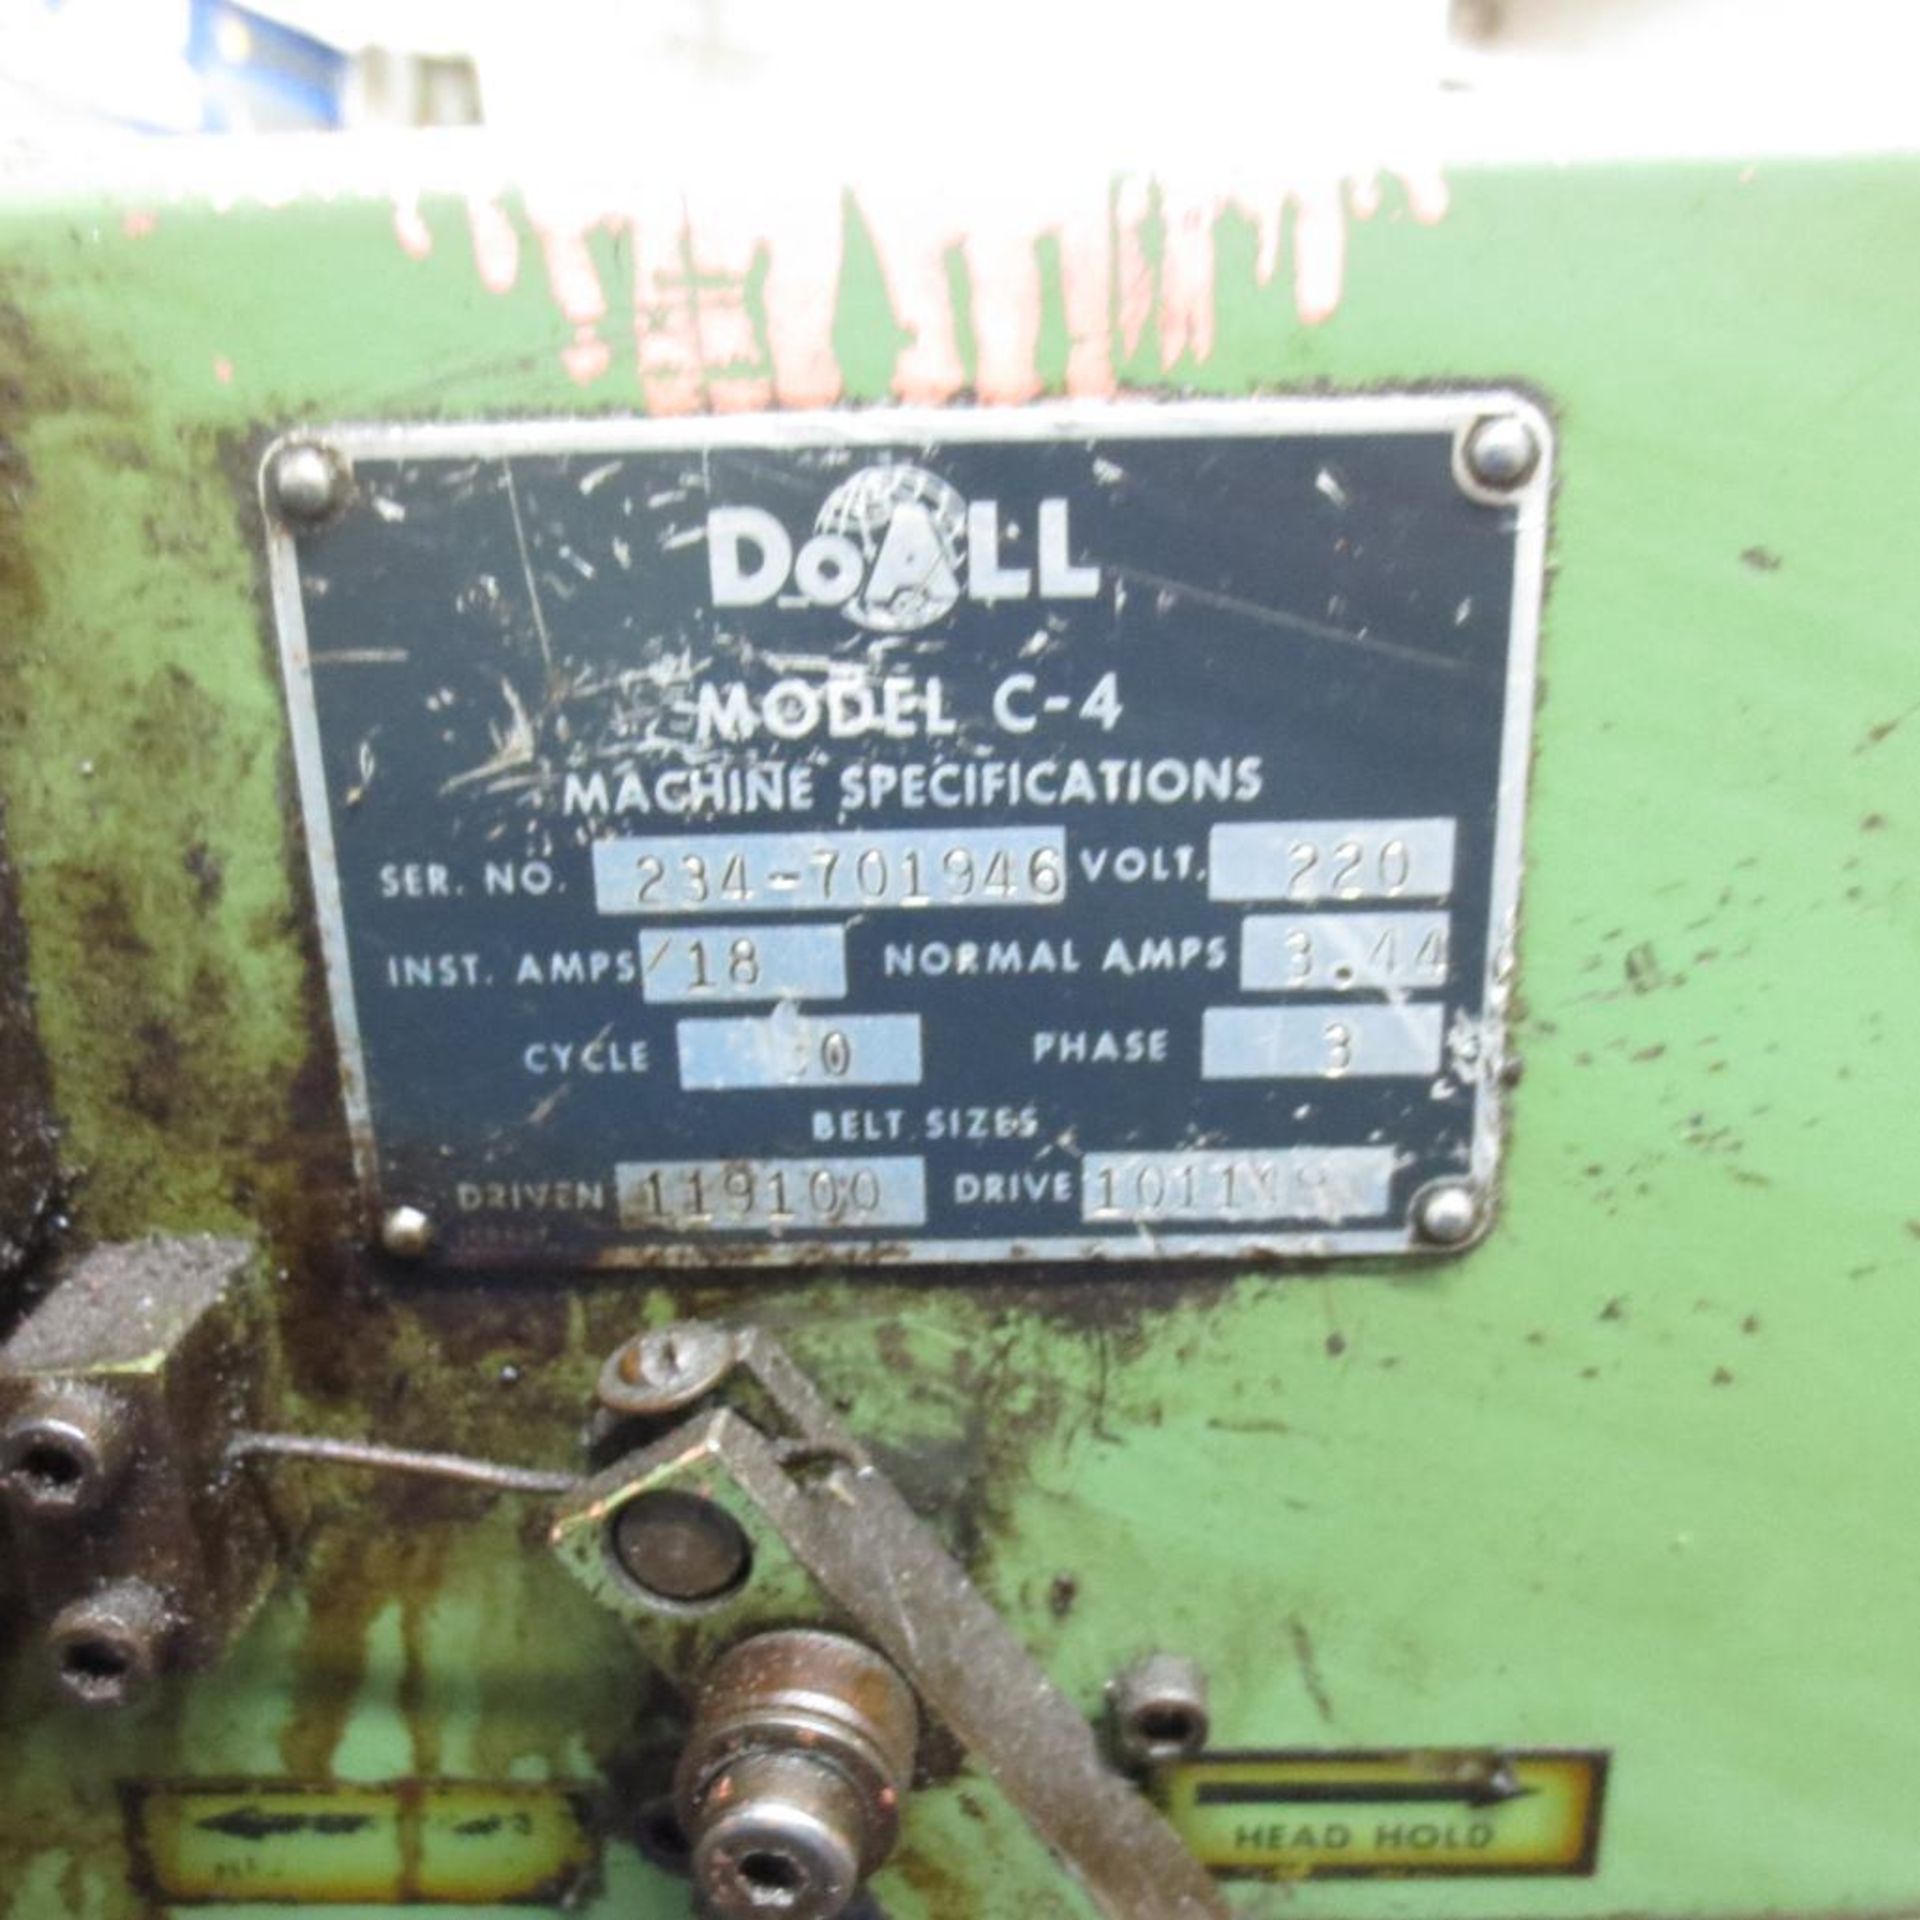 DoAll Model C-4 Portable Horizontal Band Saw S/N 234-701946, 3 HP, 220V *RIGGING $50* - Image 5 of 5